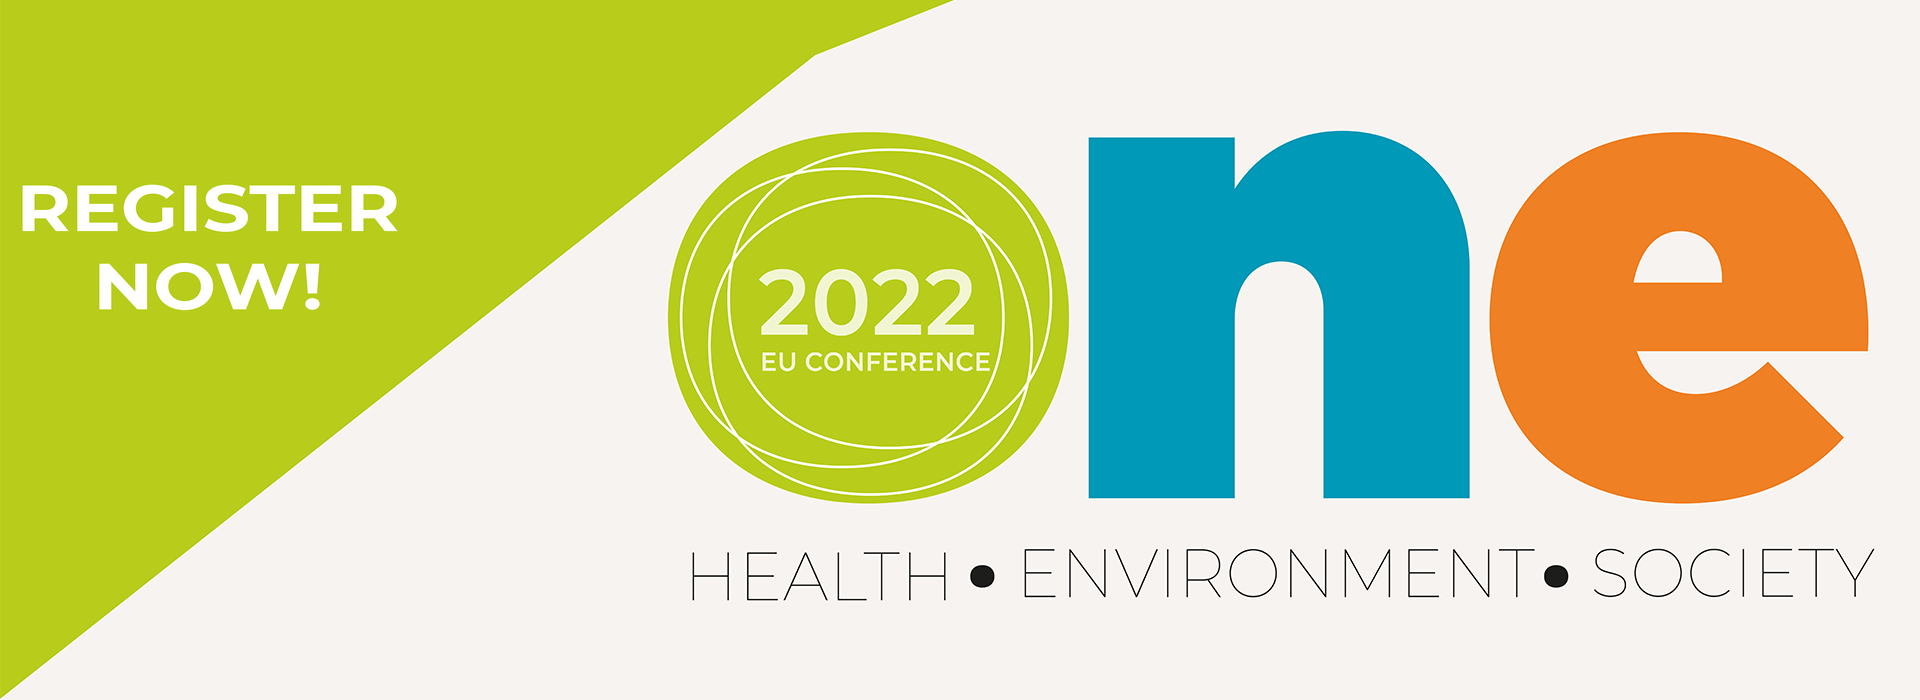 Предстояща конференция ONE – Health, Environment, Society – Conference 2022